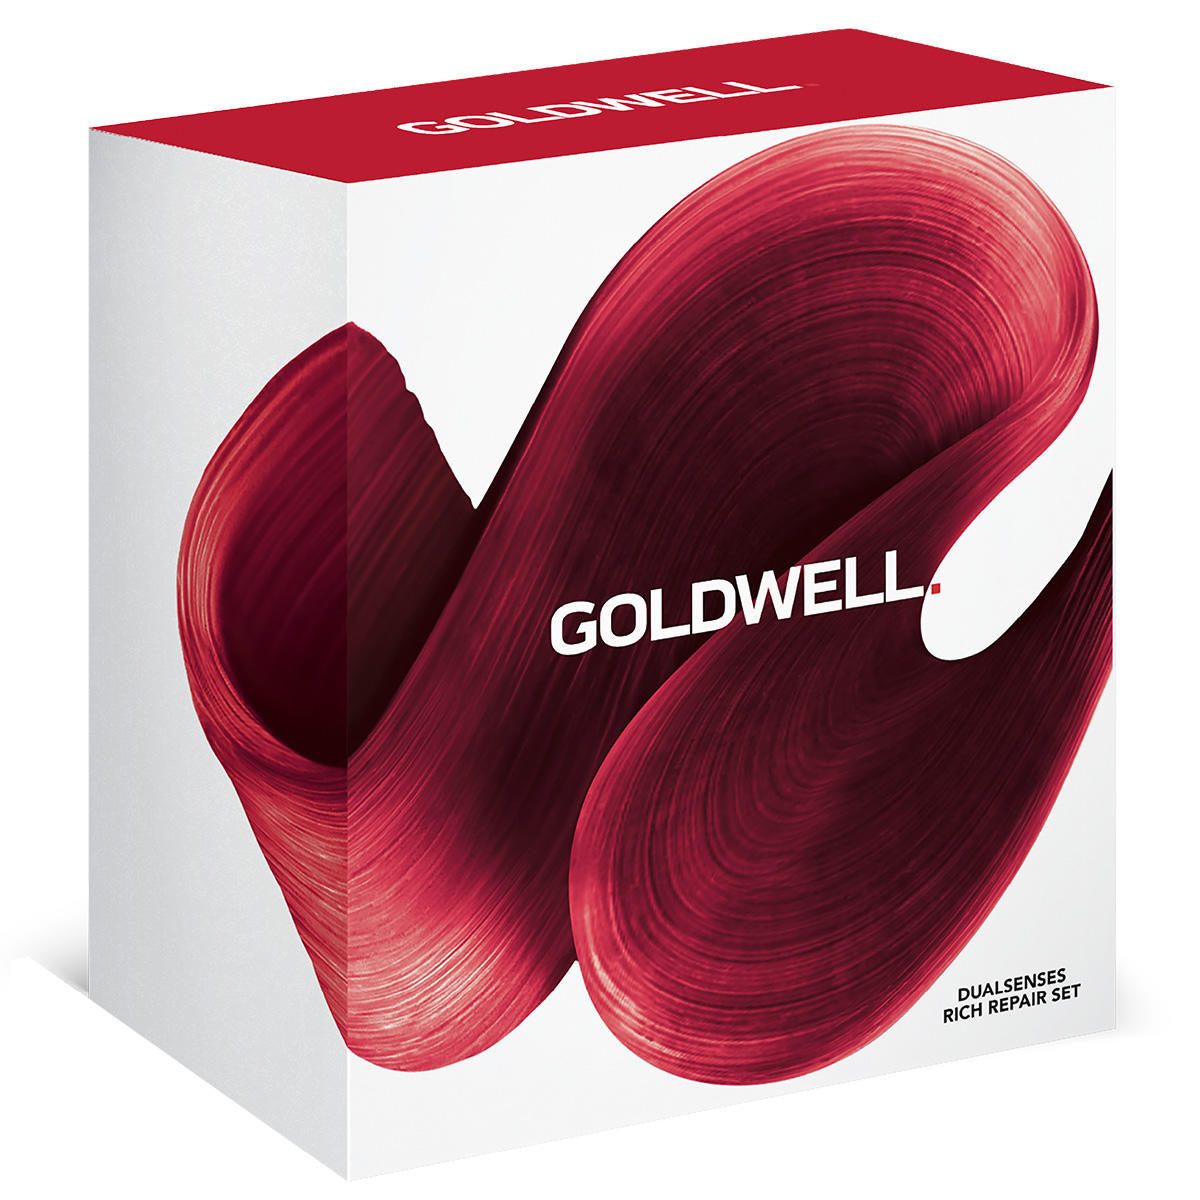 Goldwell Dualsenses Rich Repair Set de regalo  - 1